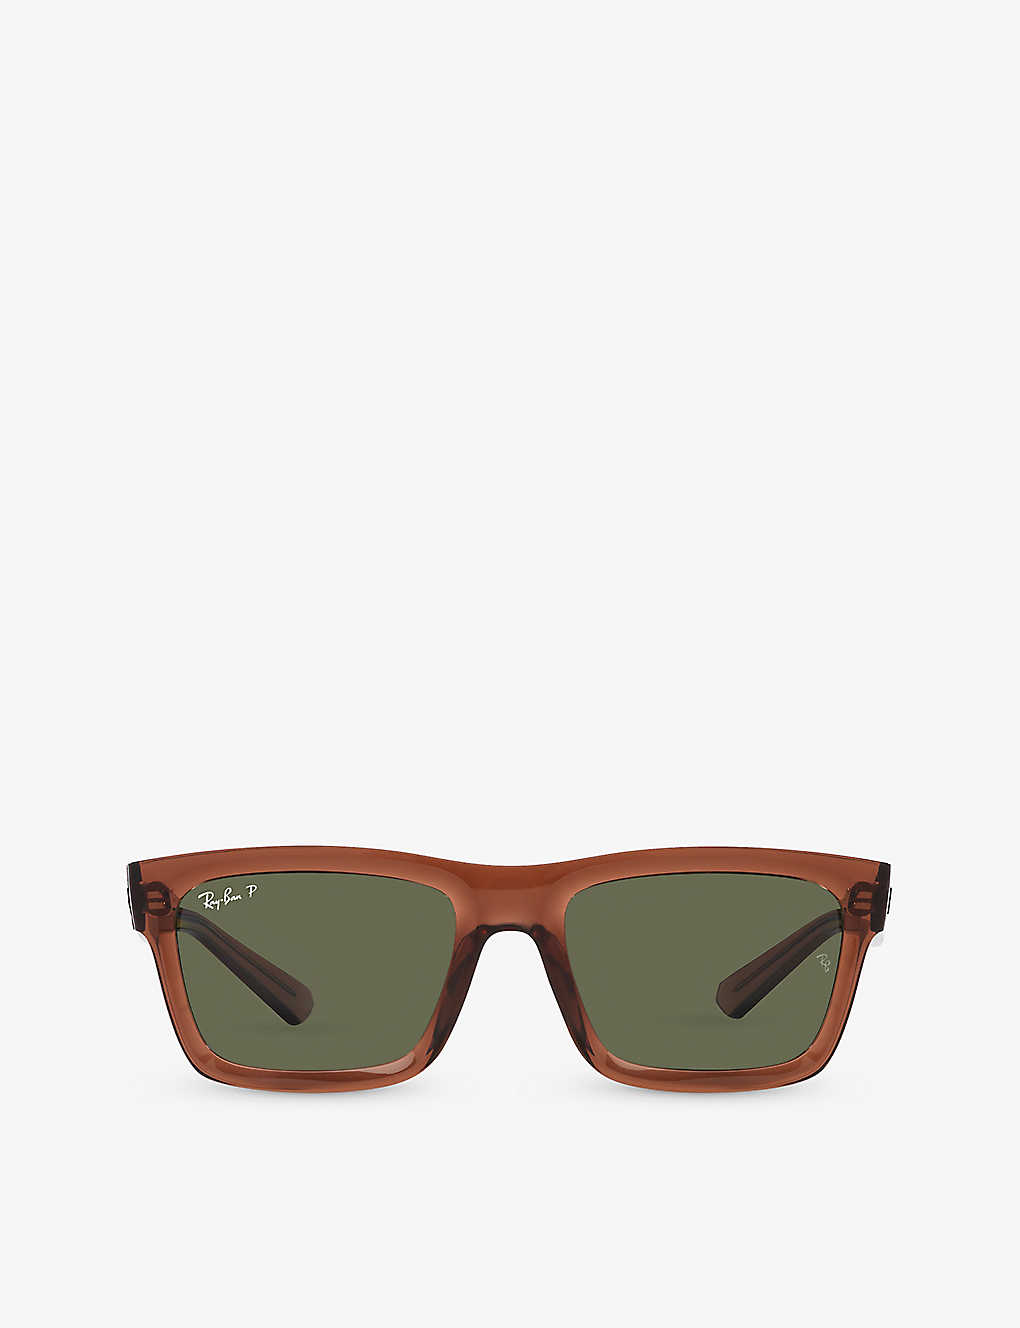 Ray Ban Sunglasses Unisex Warren Bio-based - Transparent Brown Frame Green Lenses Polarized 54-20